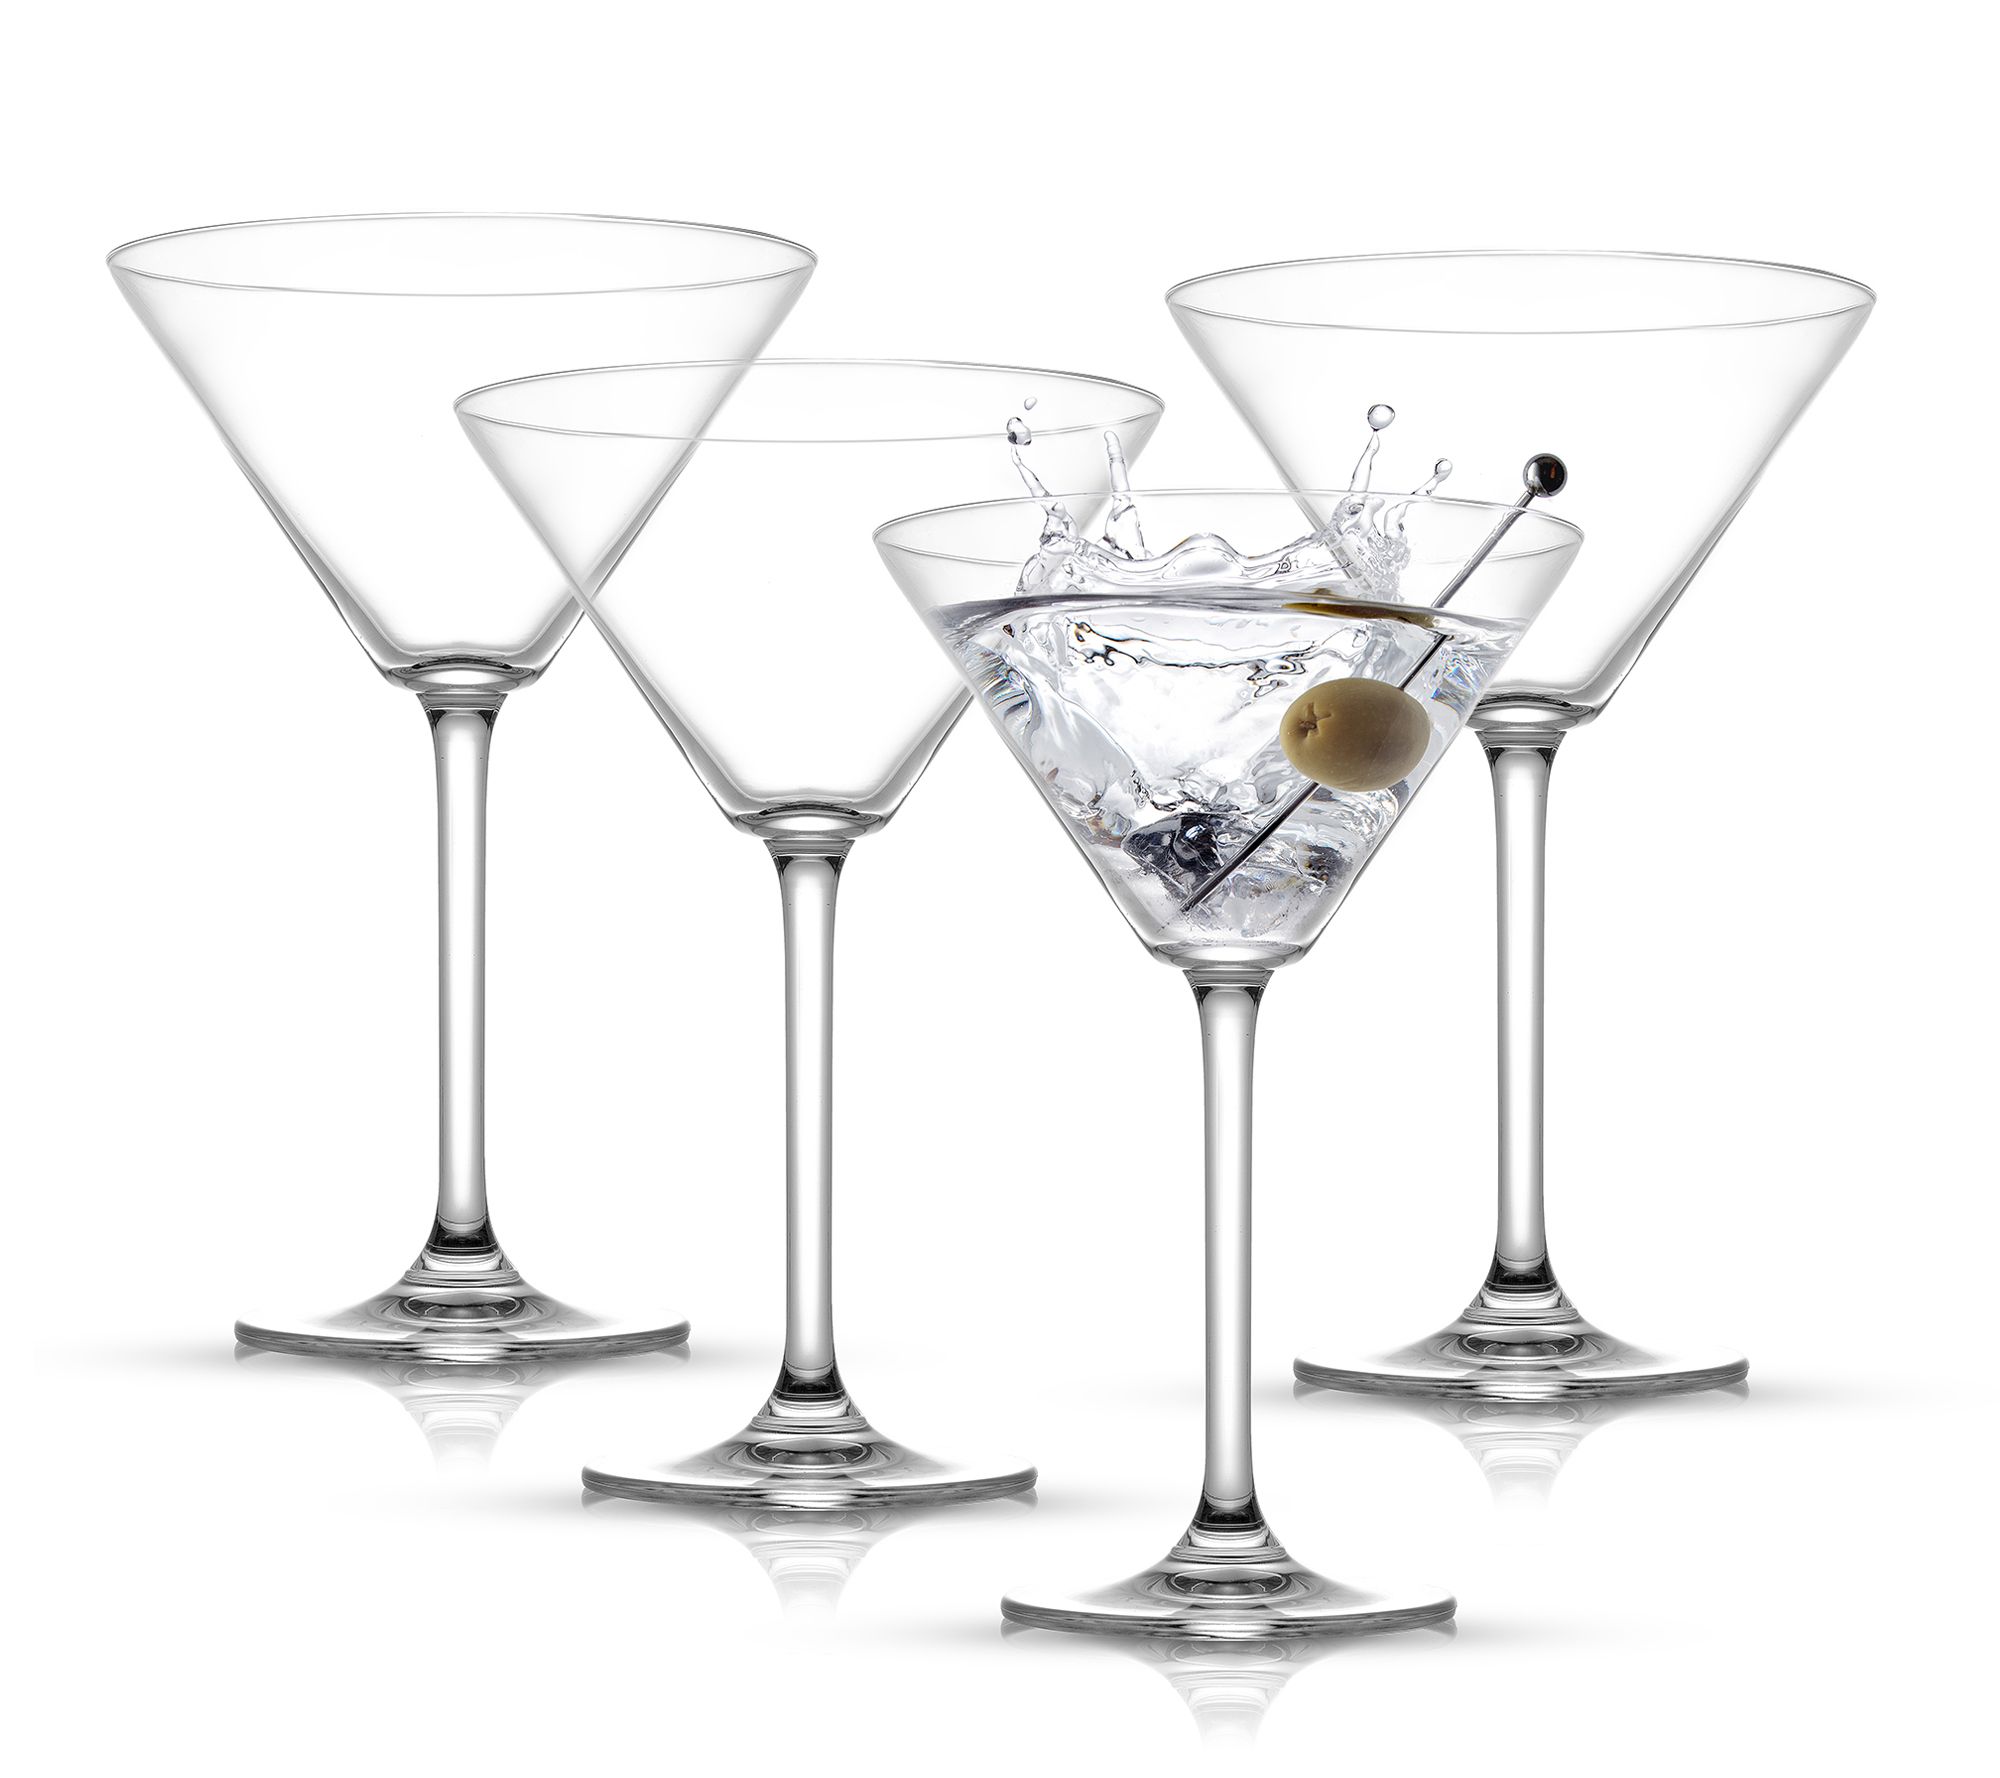 JoyJolt Carre 2-Piece Cocktail Glasses Set, 8 Ounce Martini